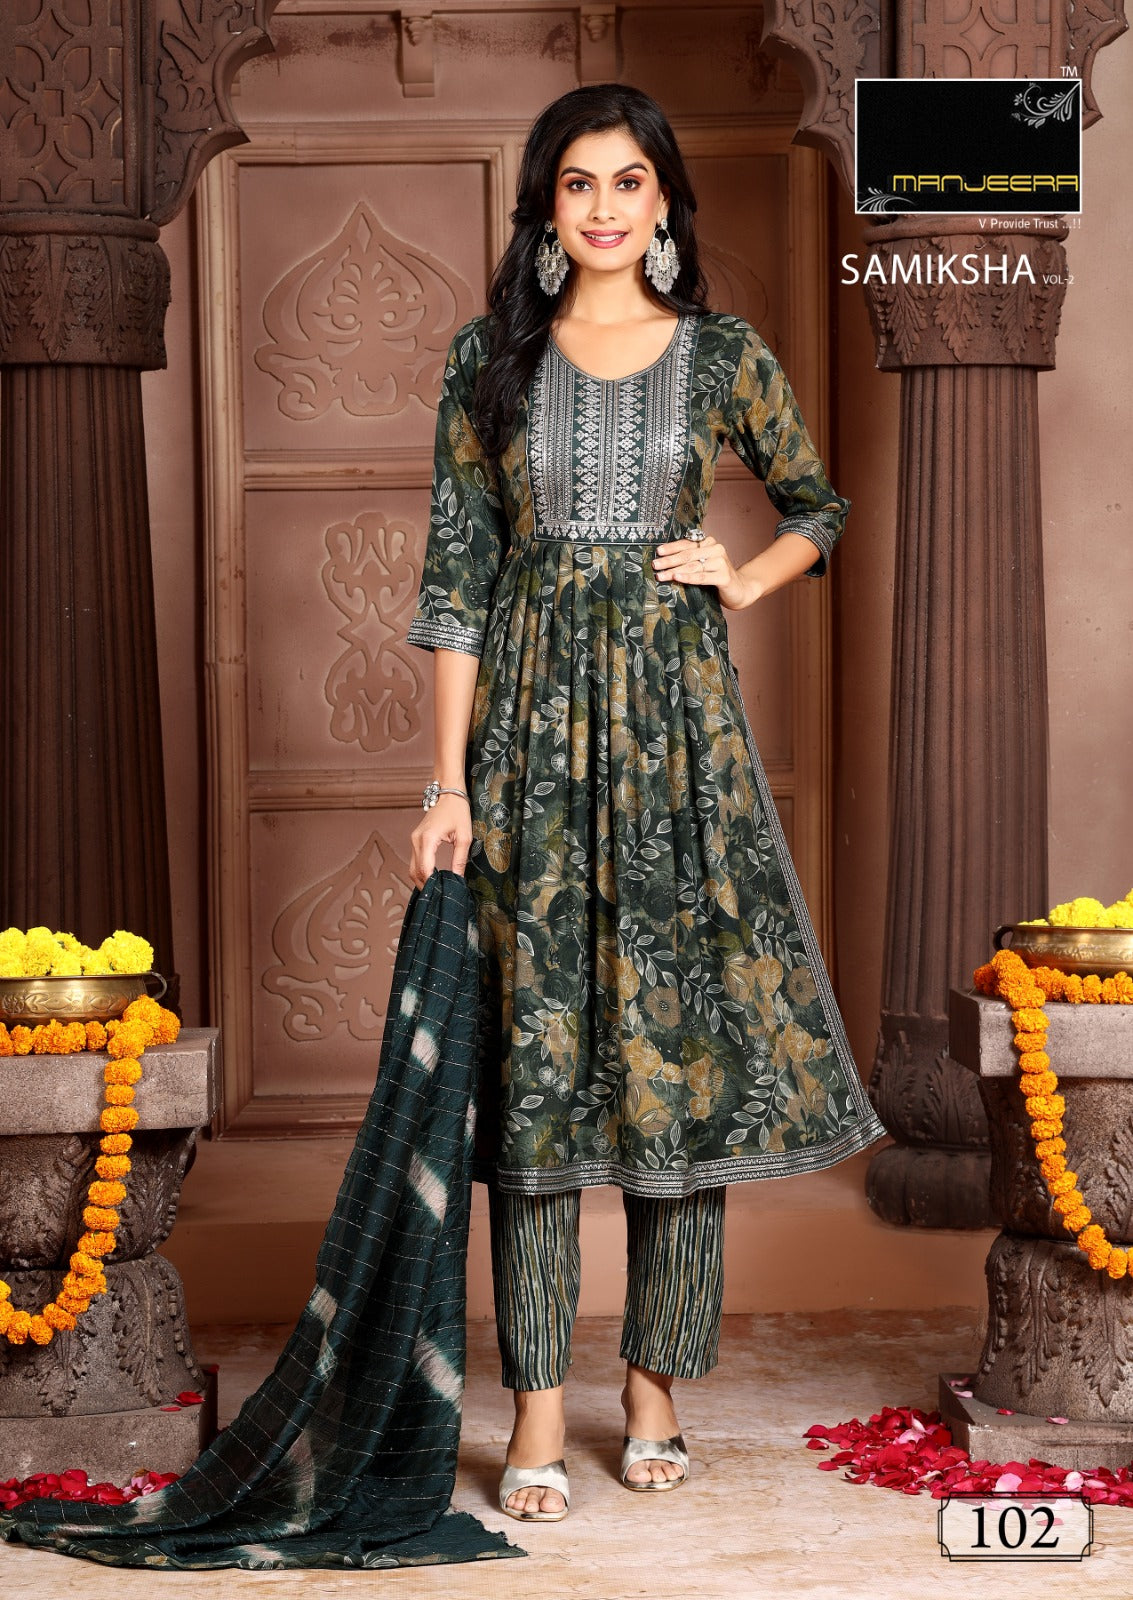 Samiksha Vol 2 Manjeera Fancy Readymade Pant Style Suits